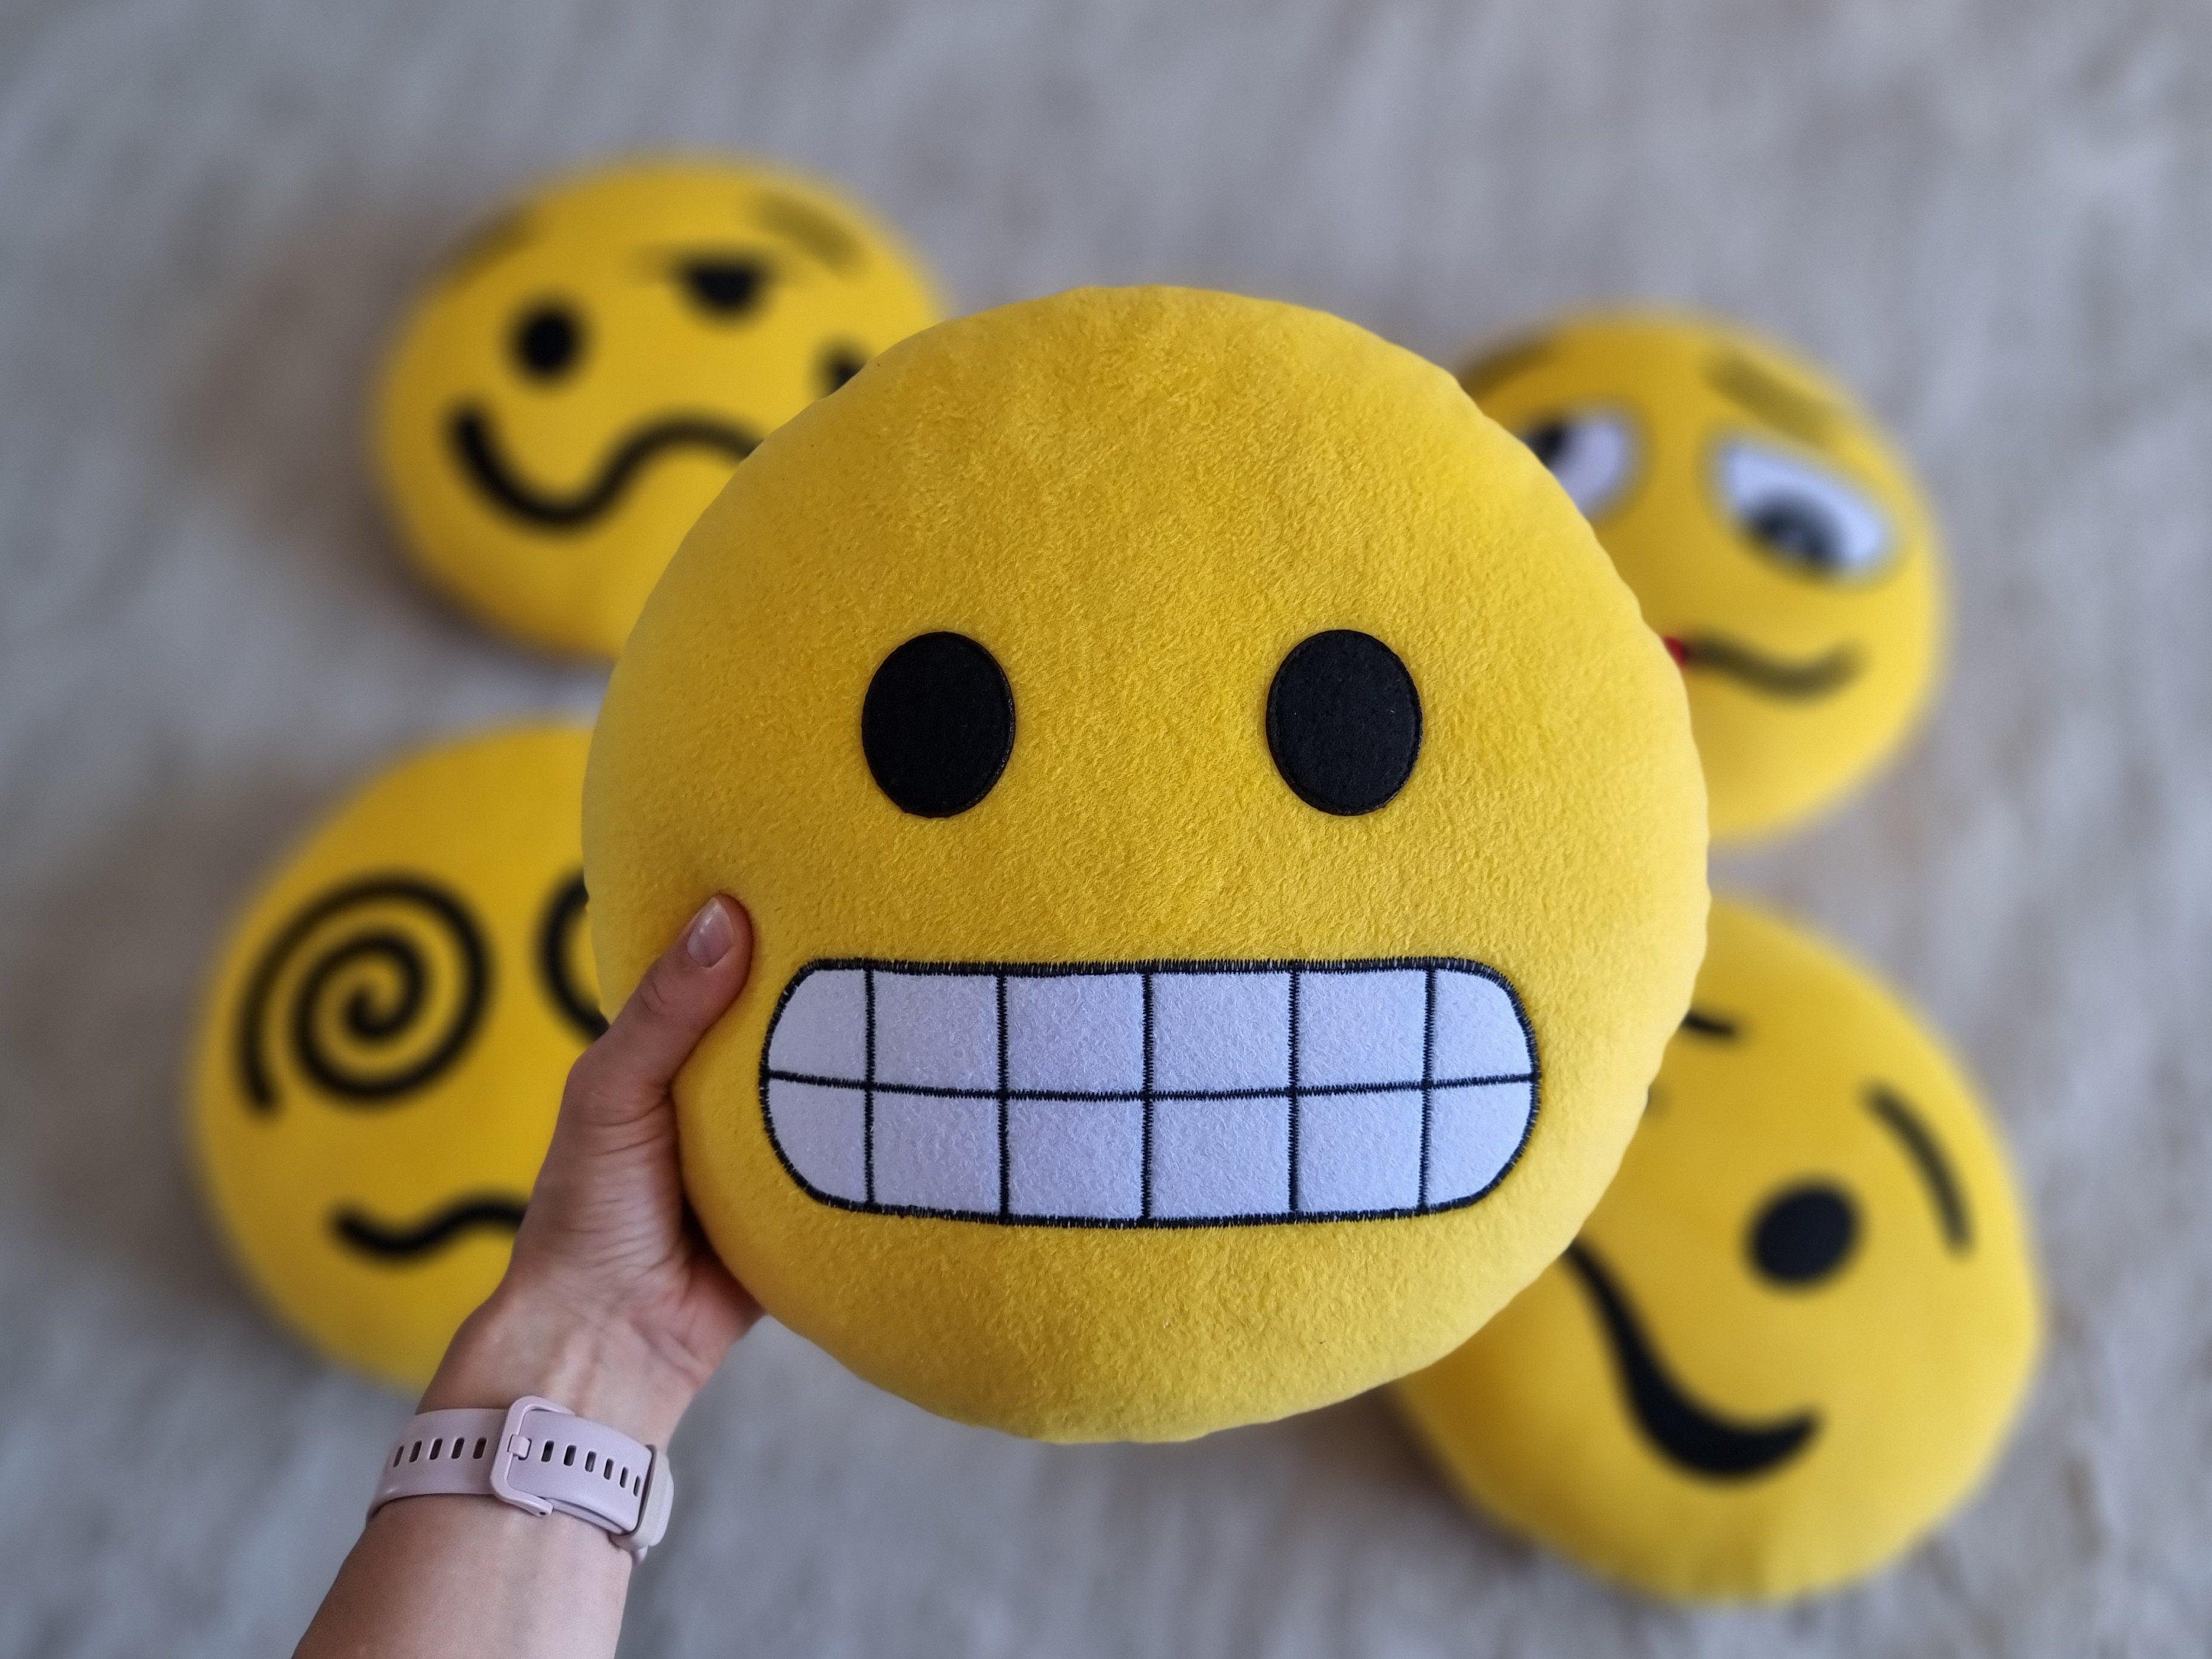 Emoji pillows Bangladesh